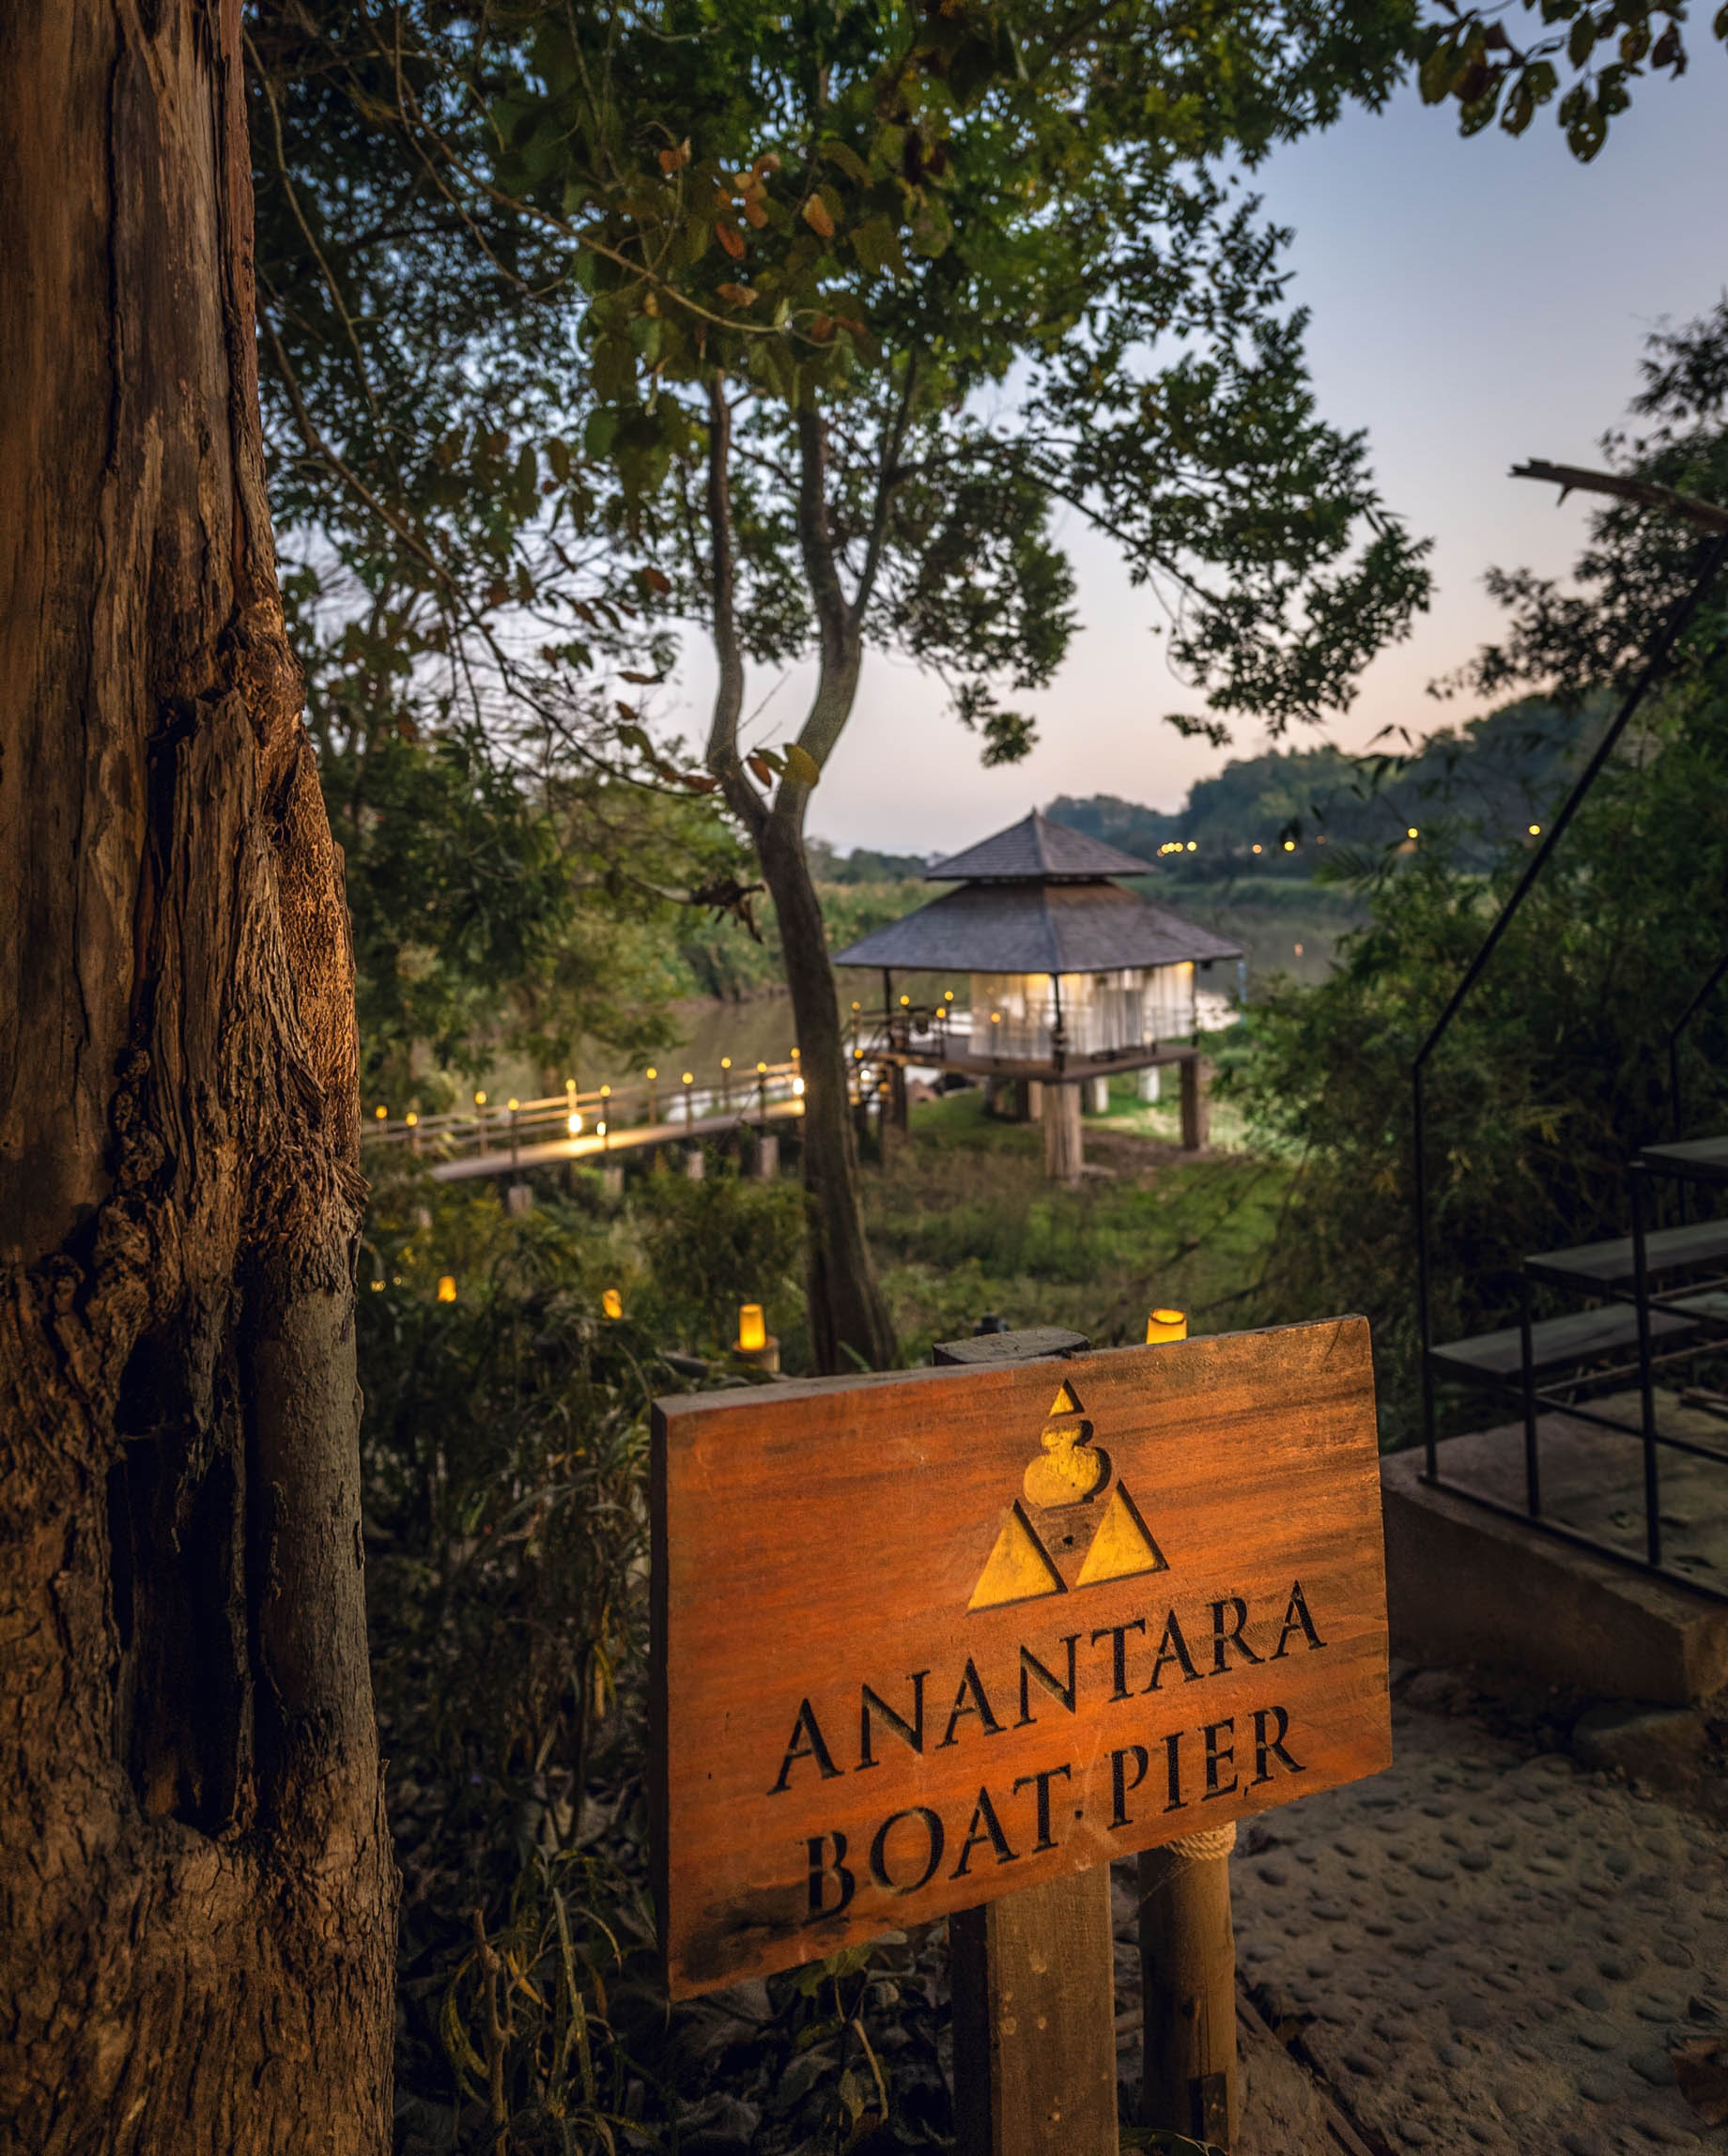 Anantara Golden Triangle Elephant Camp & Resort - Chiang Rai, Thailand - Boat Pier